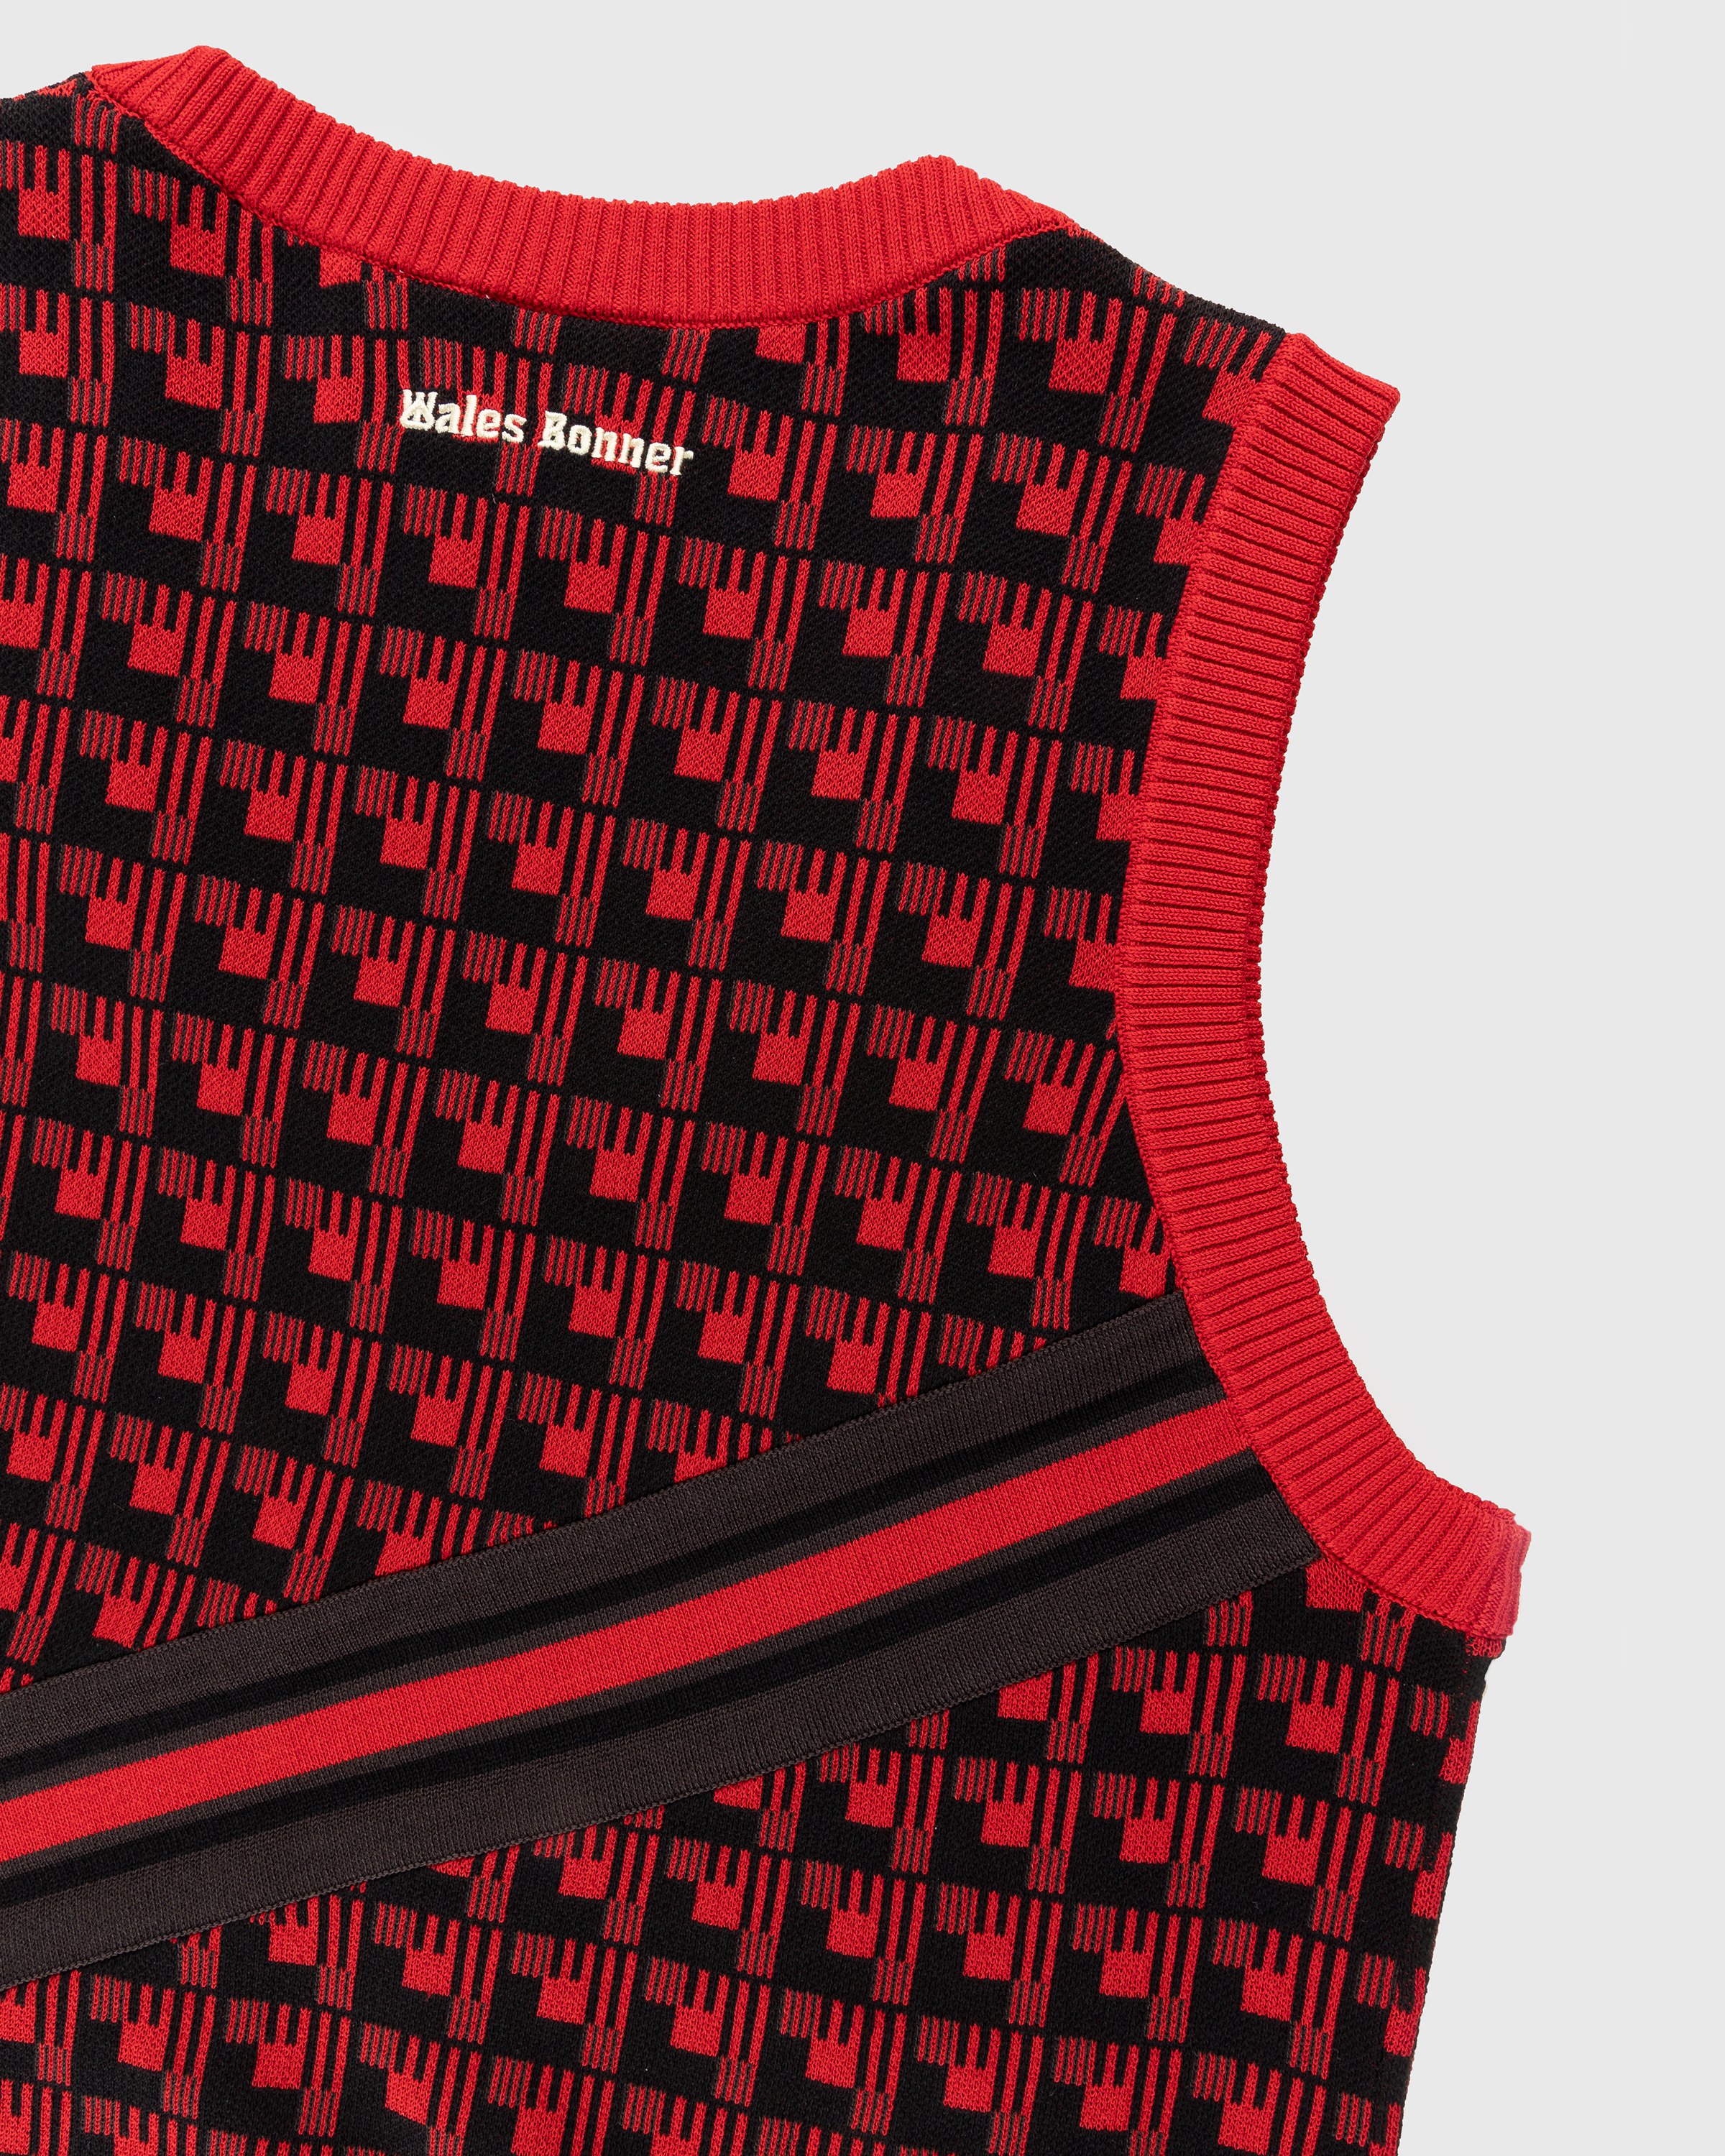 Adidas x Wales Bonner - WB Knit Vest Scarlet/Black - Clothing - Red - Image 4